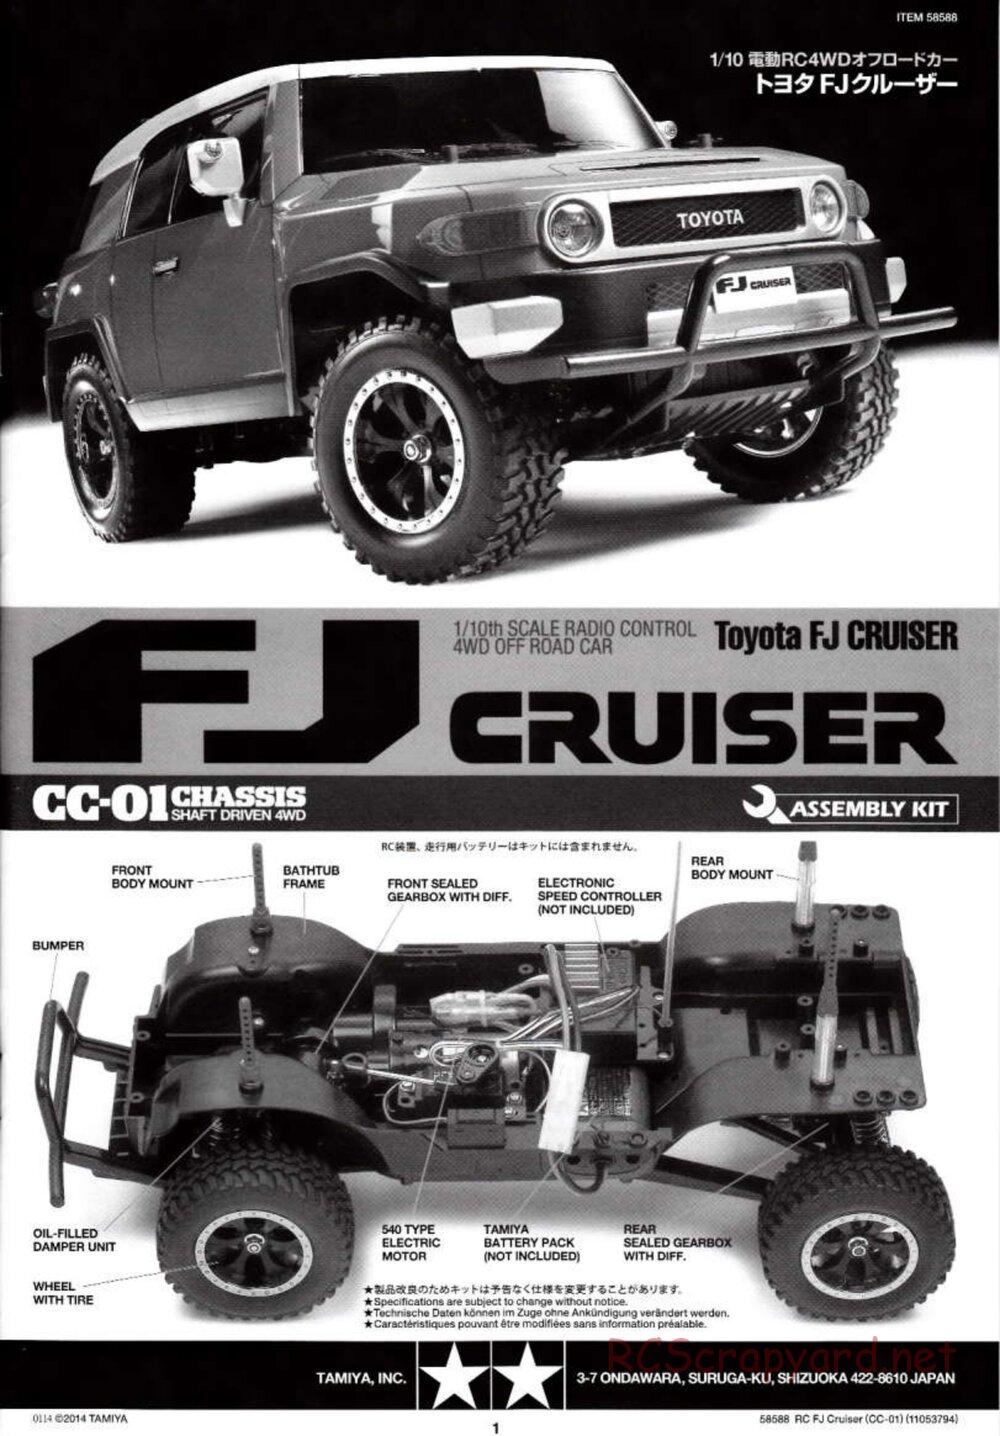 Tamiya - Toyota FJ Cruiser - CC-01 Chassis - Manual - Page 1